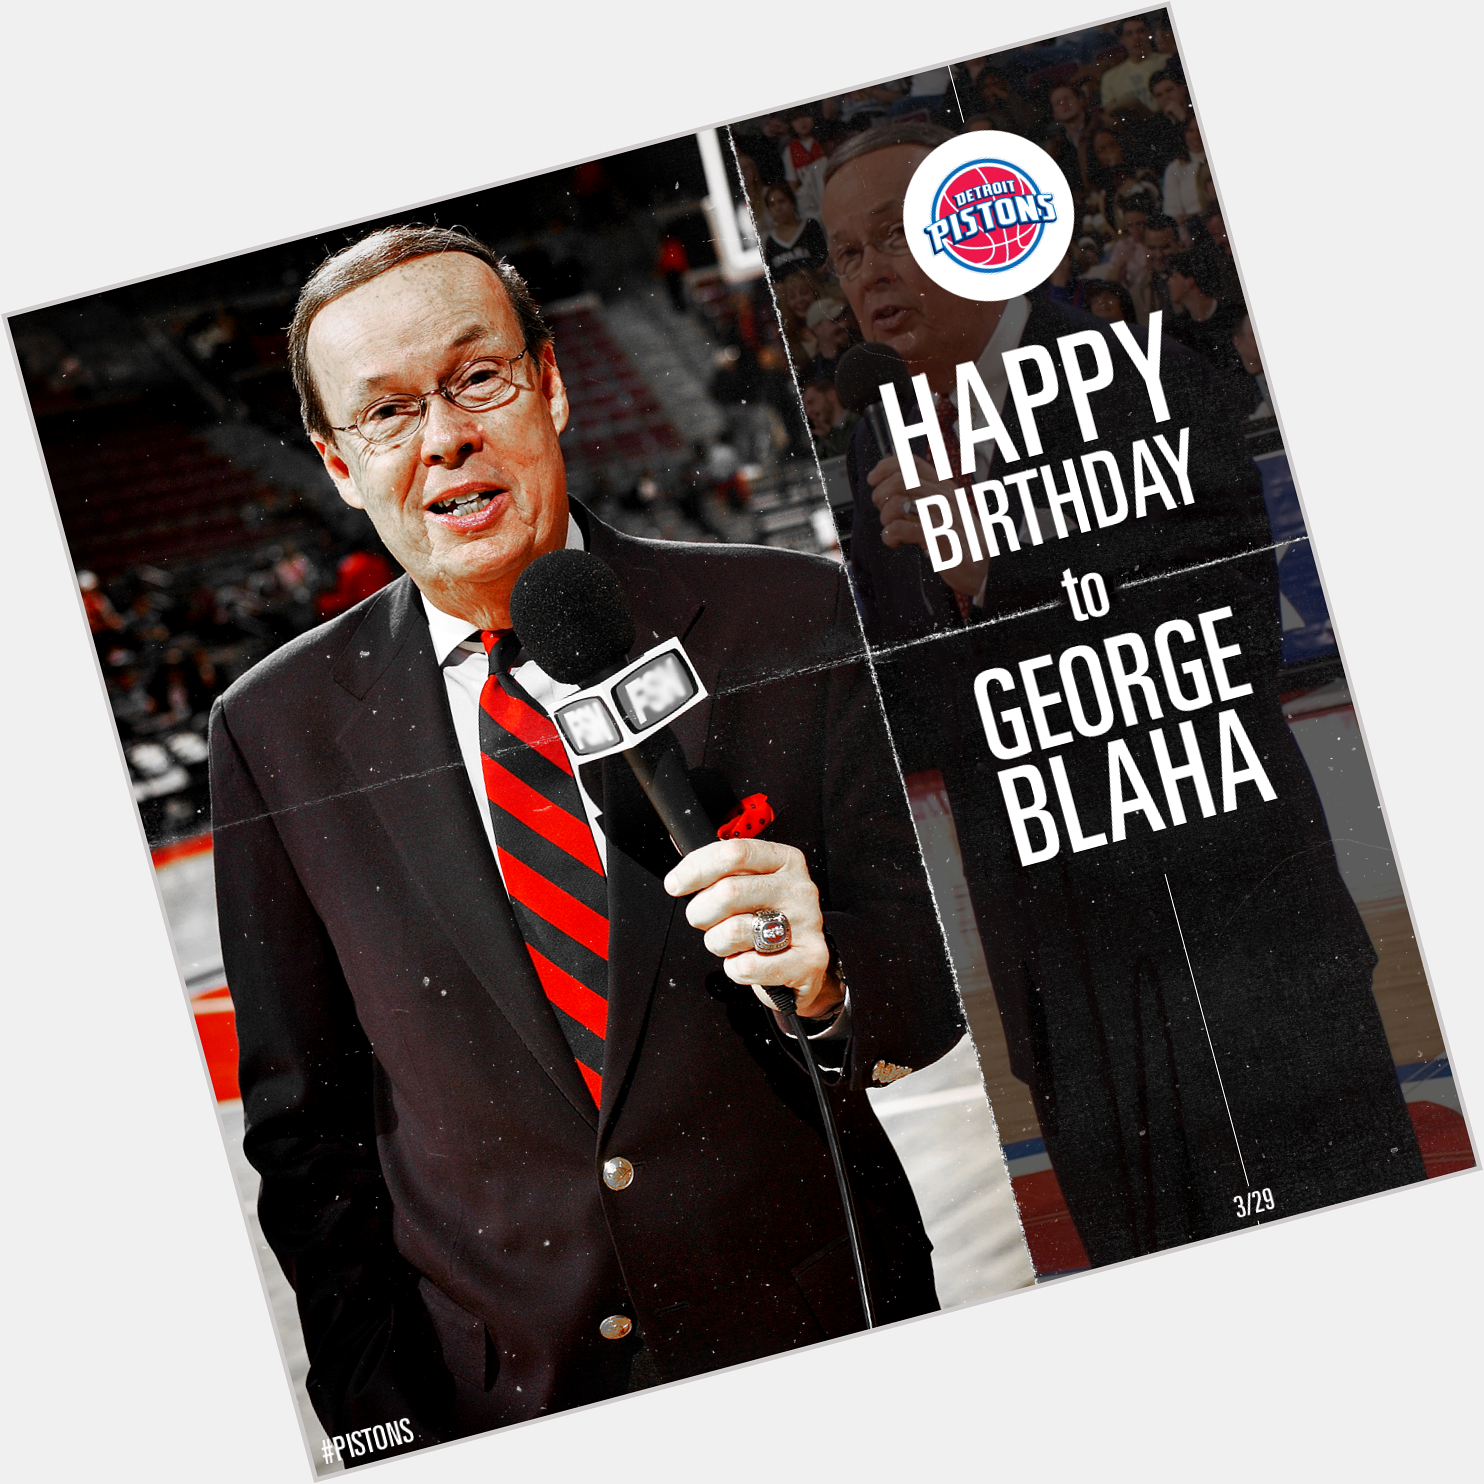  Happy Birthday George Blaha! 